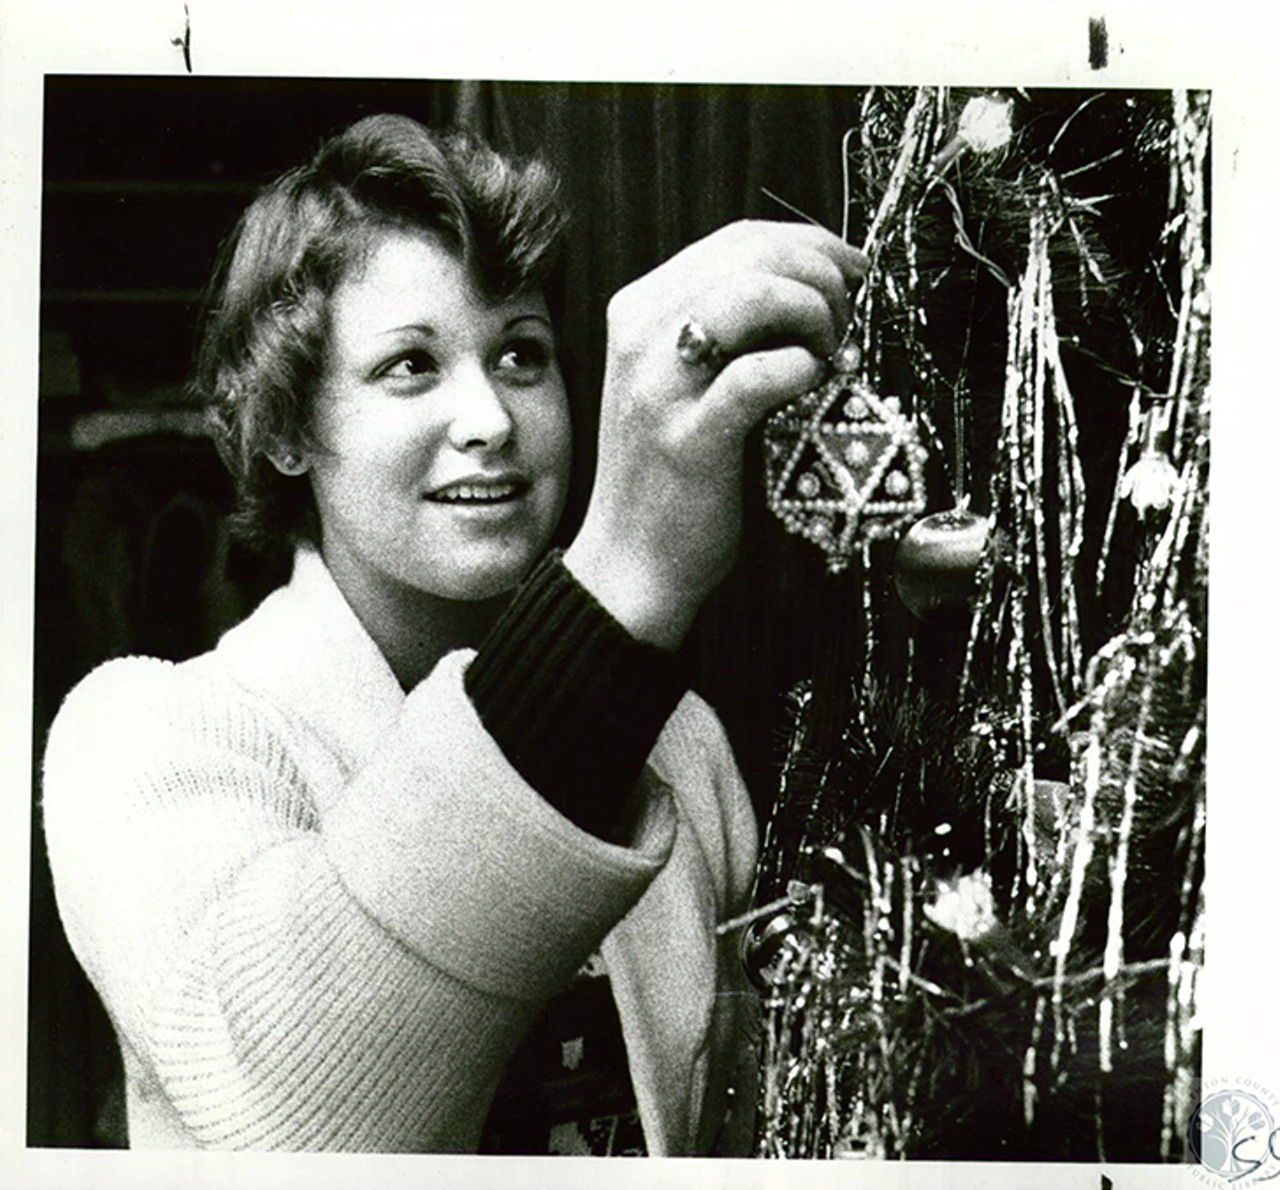 Newport, date unknown
"Joyce Nehus, 18, decorating Christmas tree"